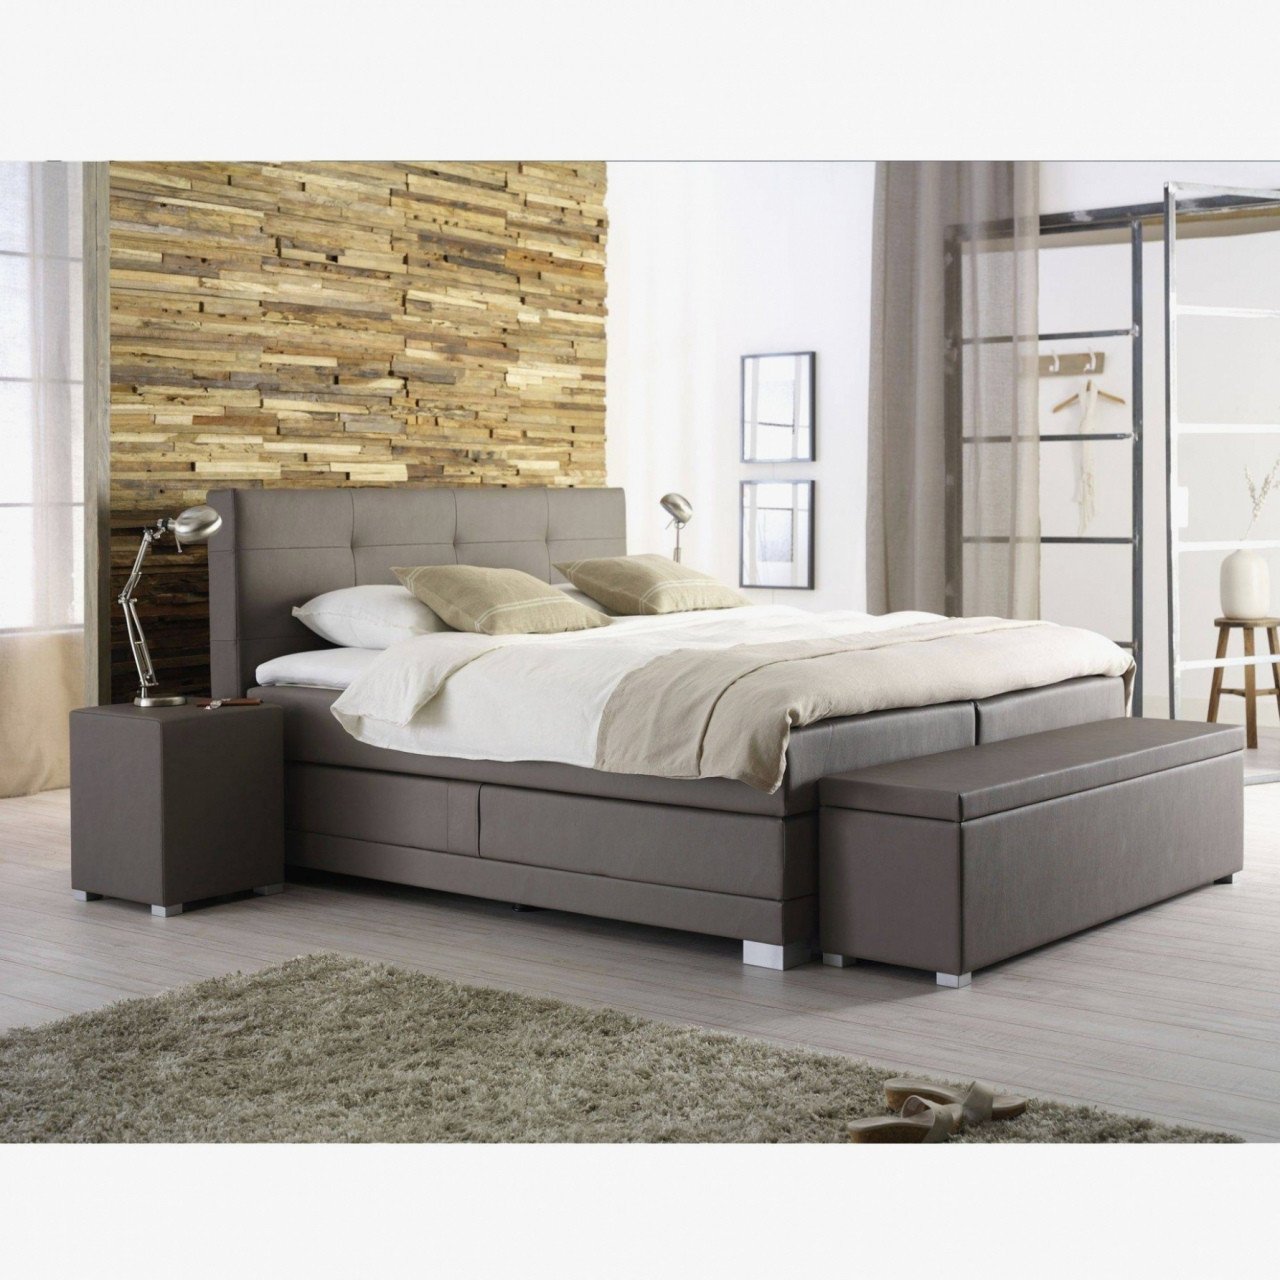 White Tufted Bedroom Set Elegant Bed with Drawers Under — Procura Home Blog